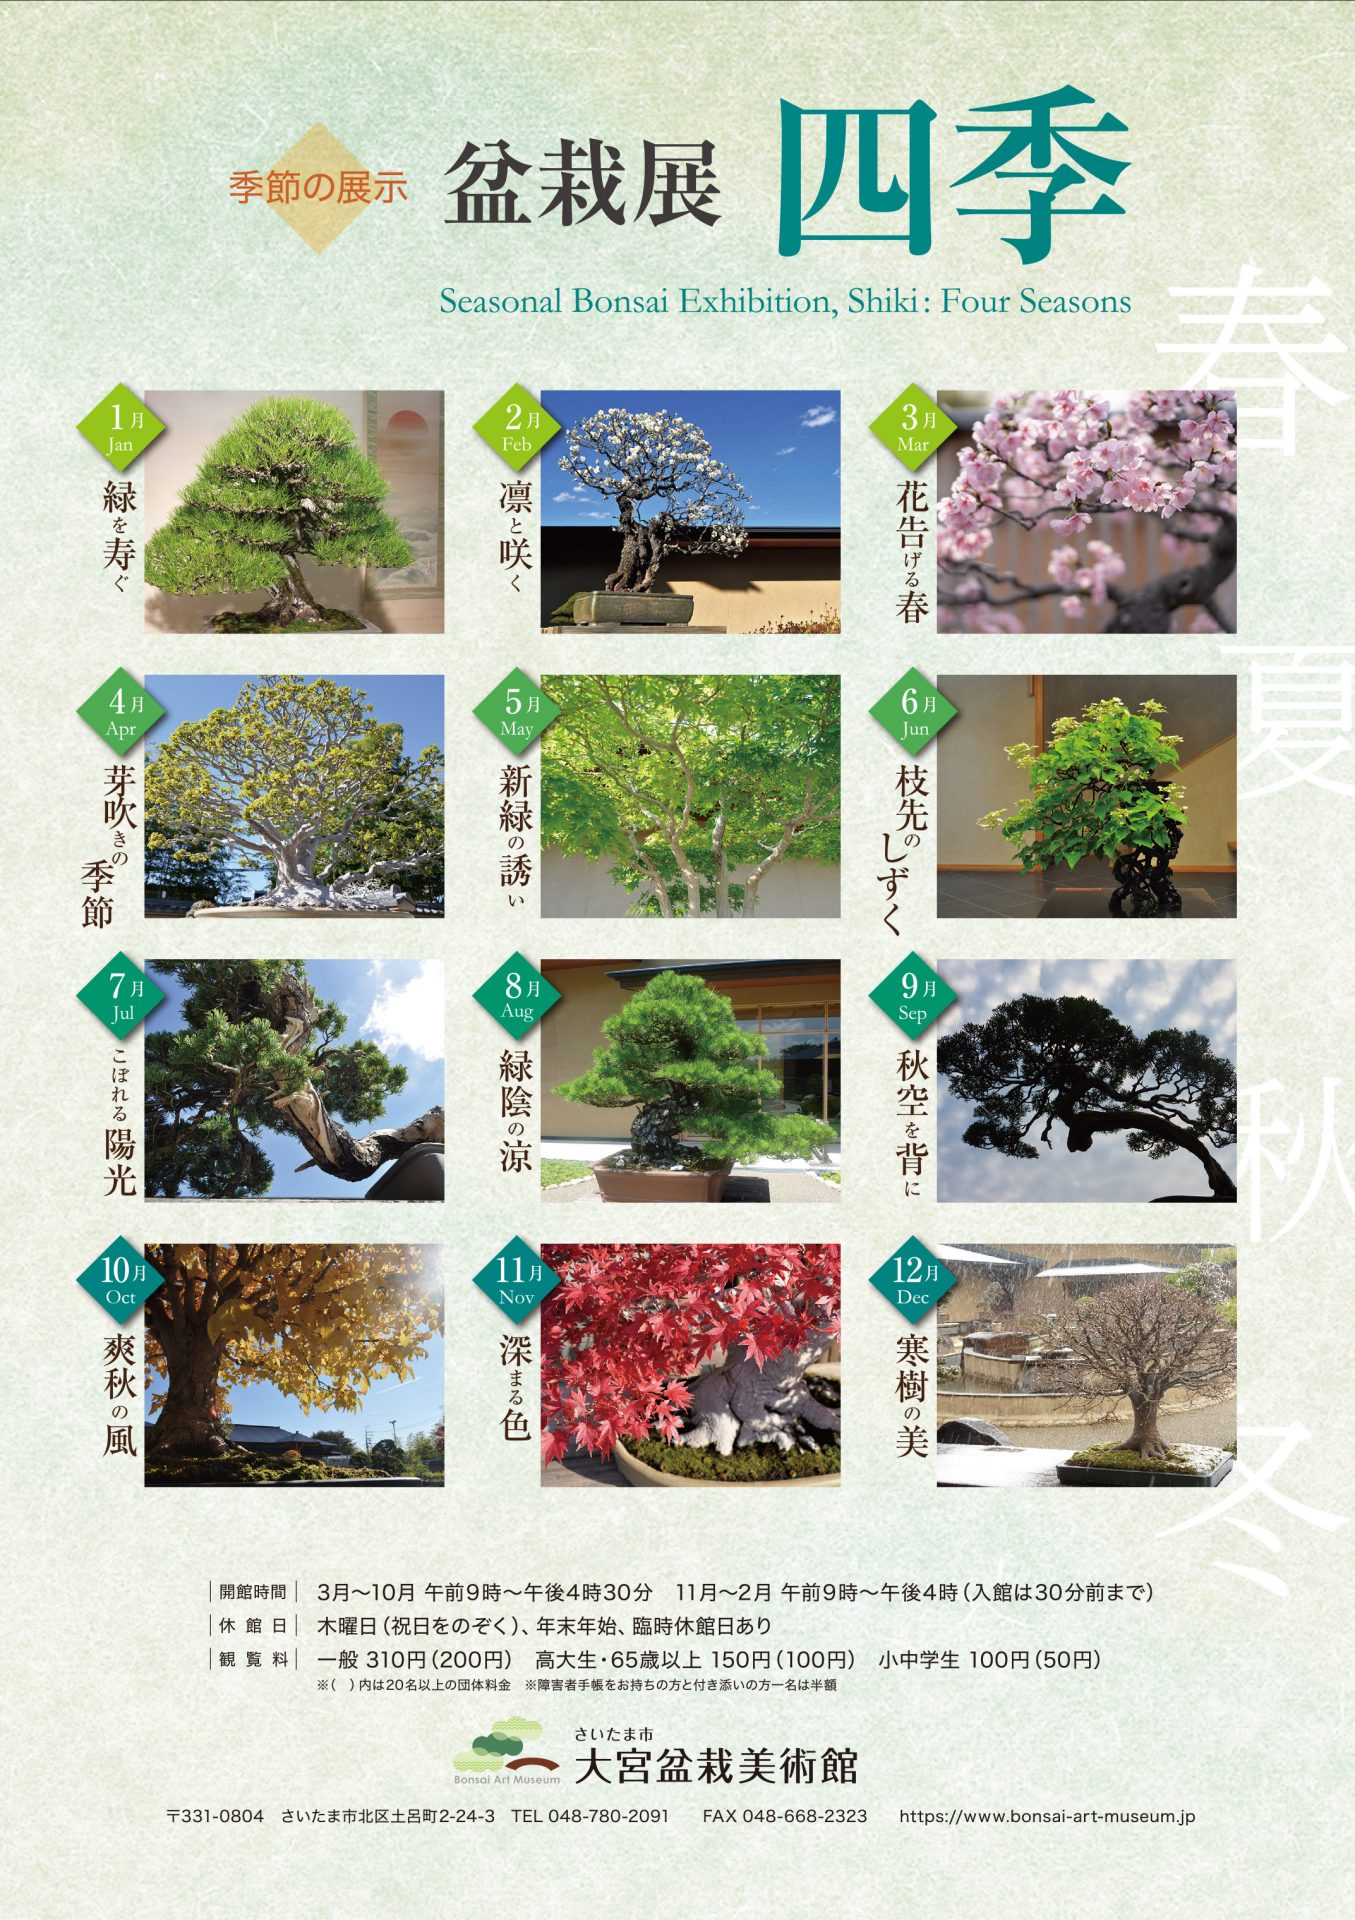 Seasonal Bonsai Exhibition, Shiki: Four Seasons, July, Spilling Sunlight